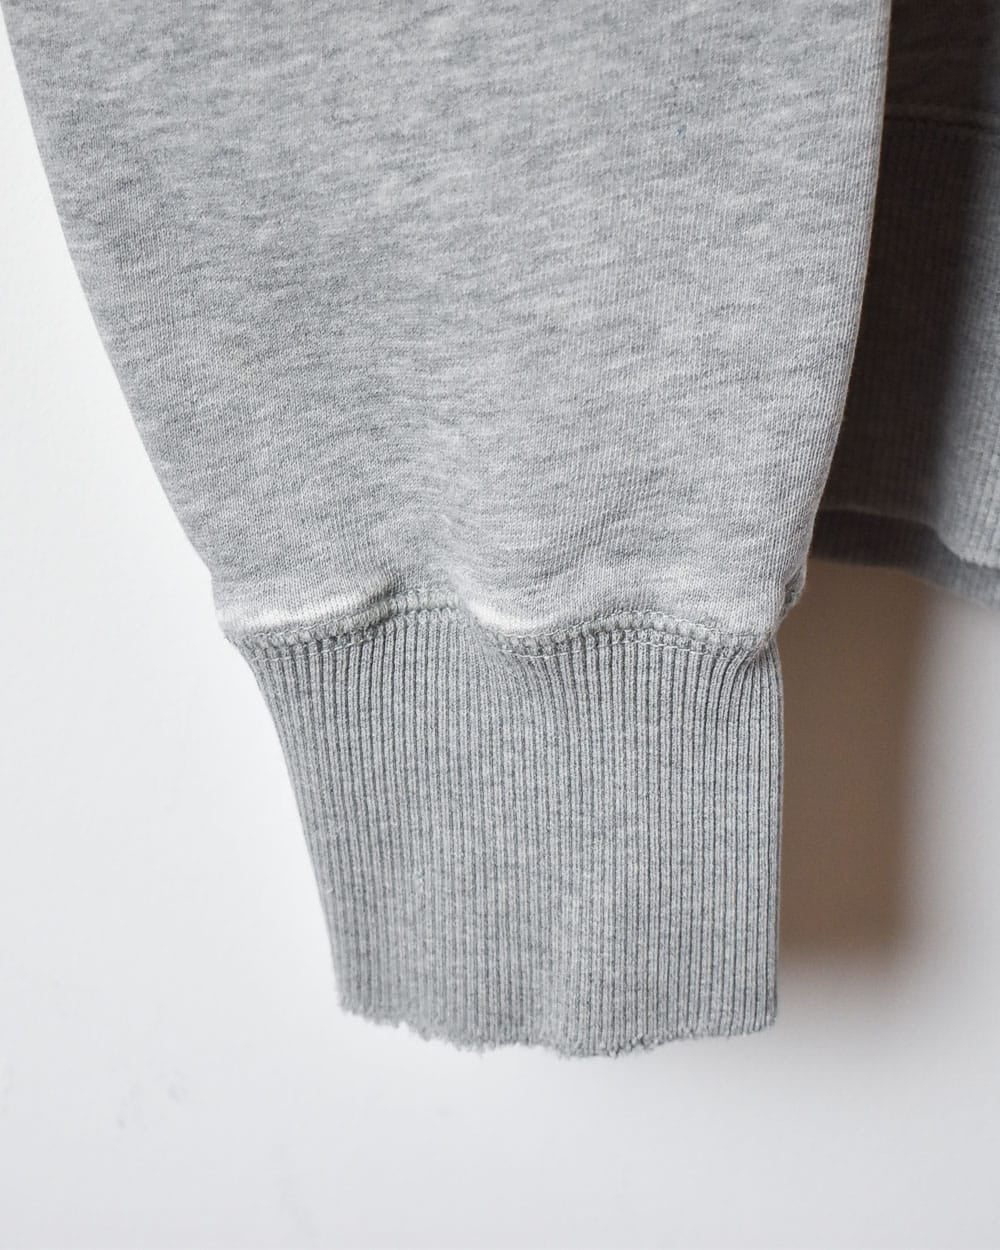 Stone Nike Worn Sweatshirt - Small